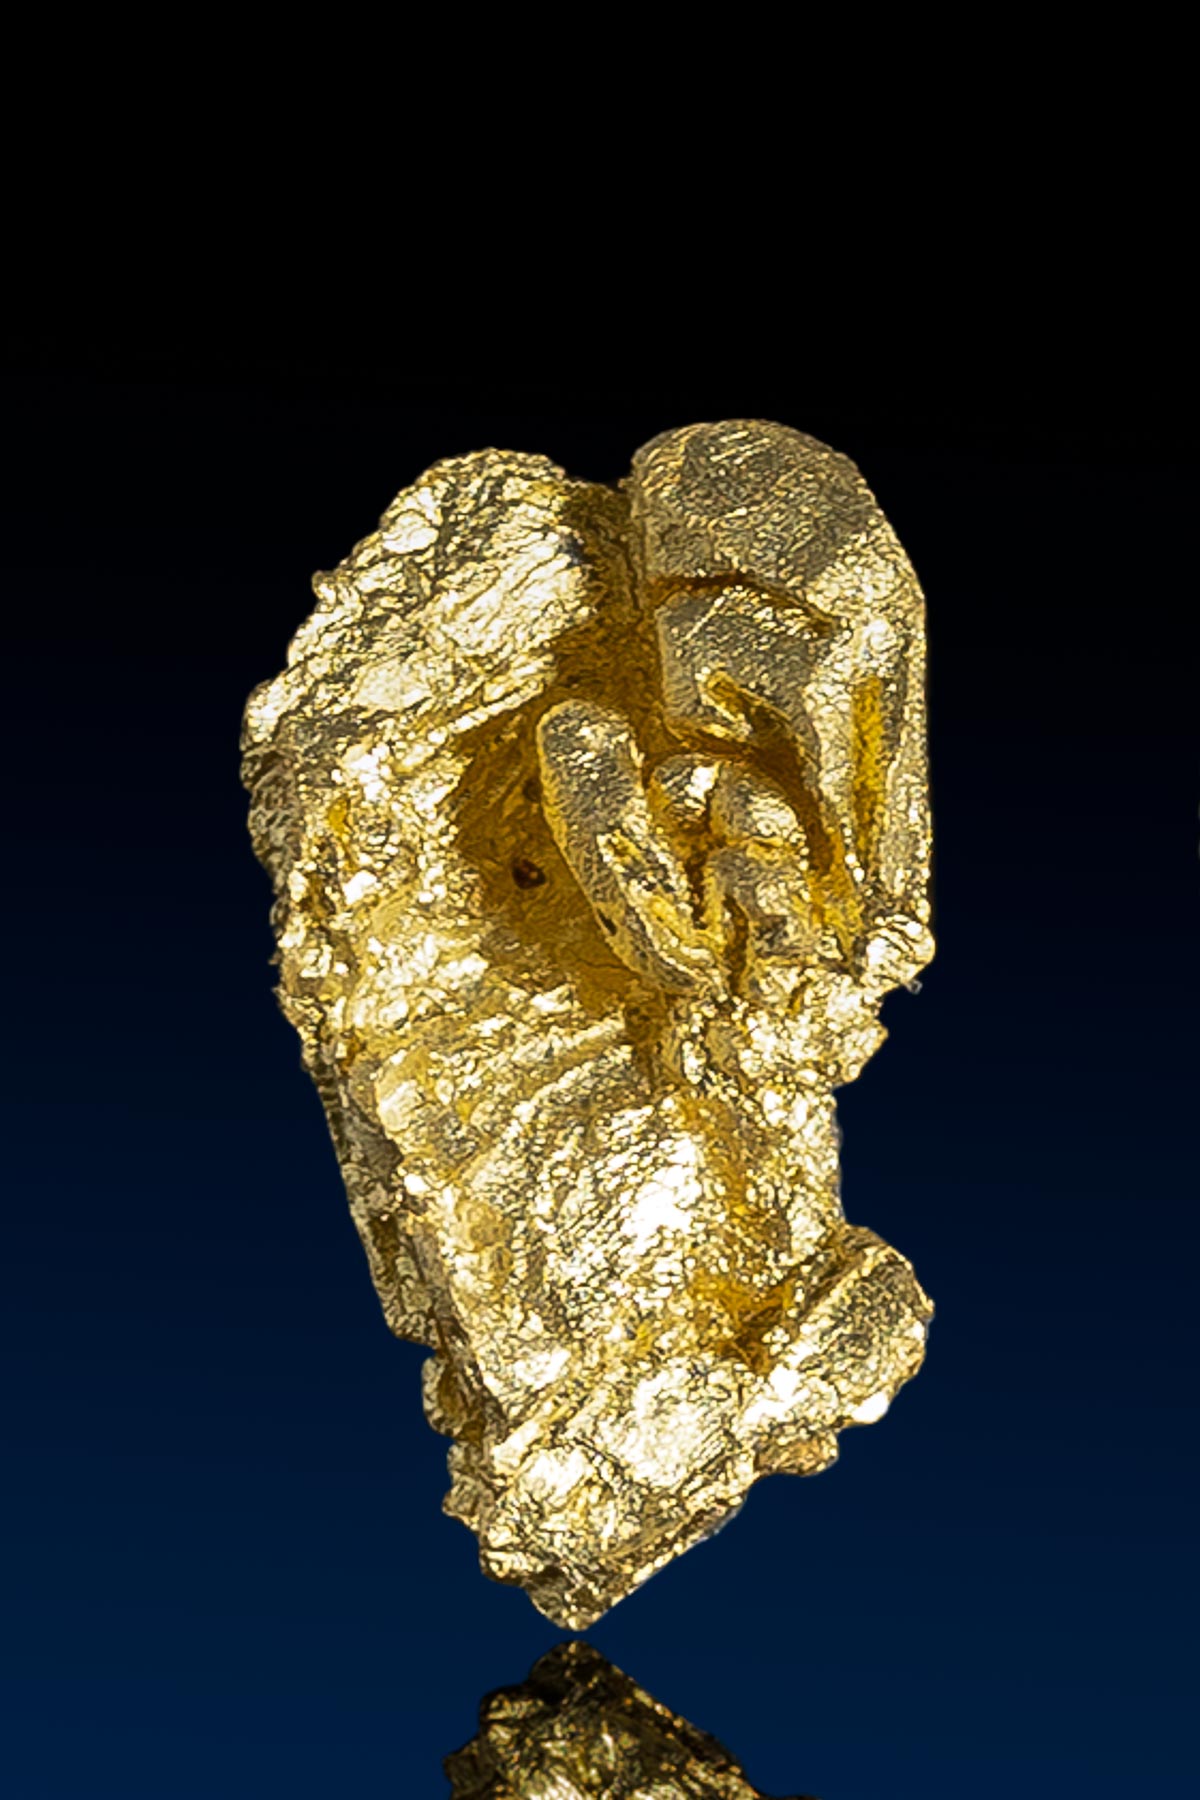 Oblong Nevada Natural Gold Nugget - 1.17 grams